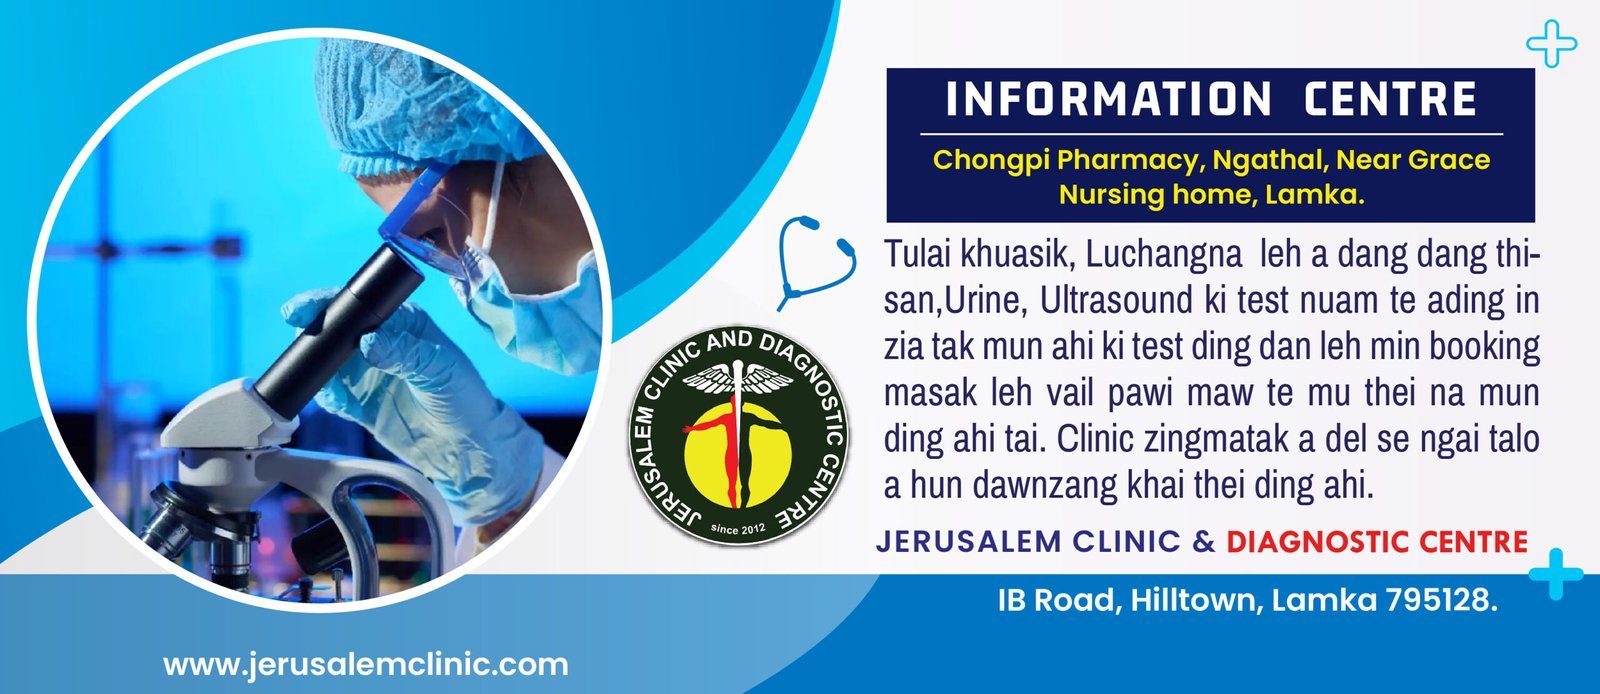 Chongpi Pharmacy, Ngathal | Information Central| Jerusalem Clinic